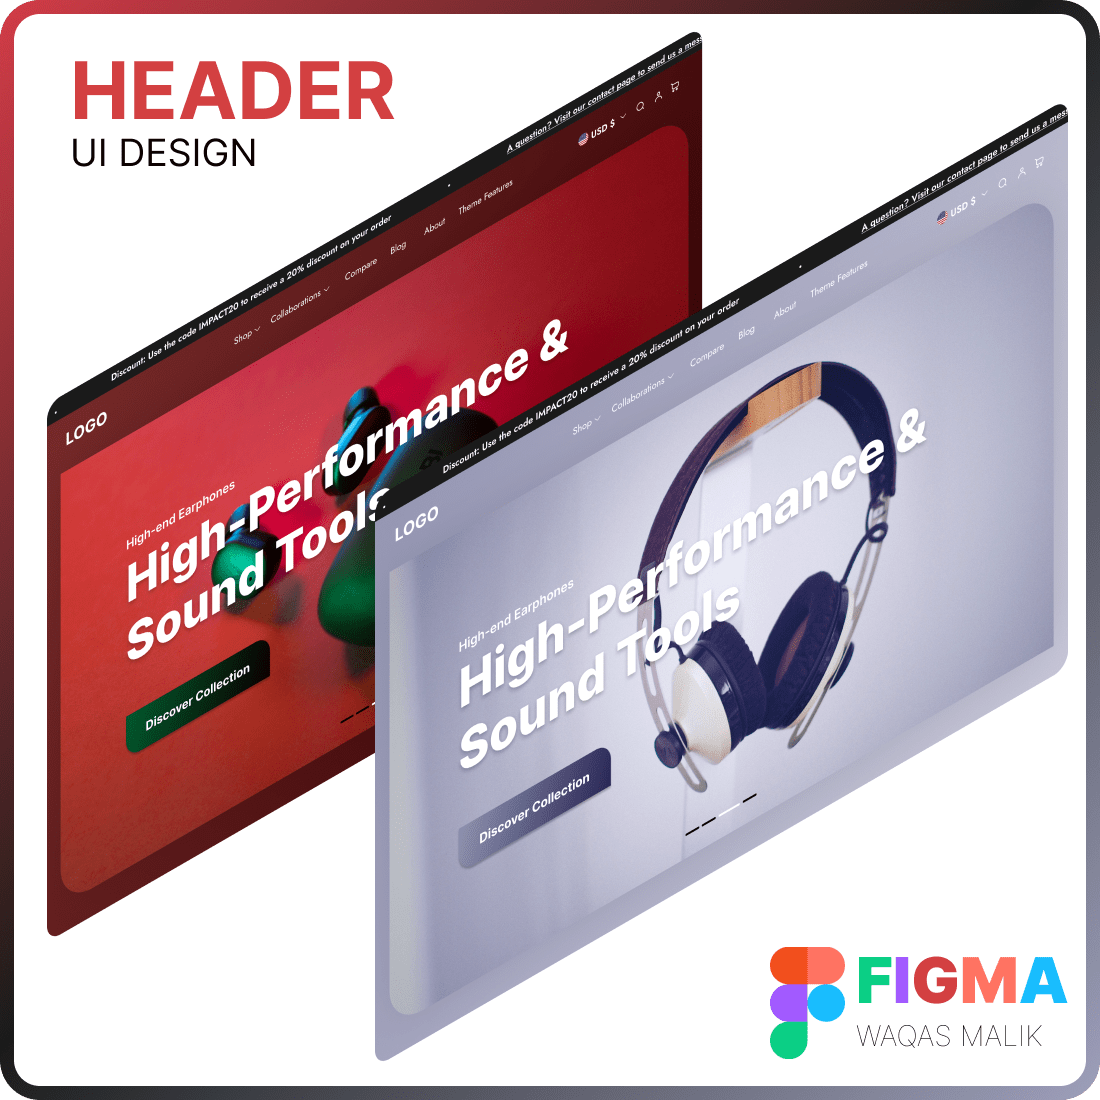 2 Web Header UI Design For E-commerce for 11$ cover image.